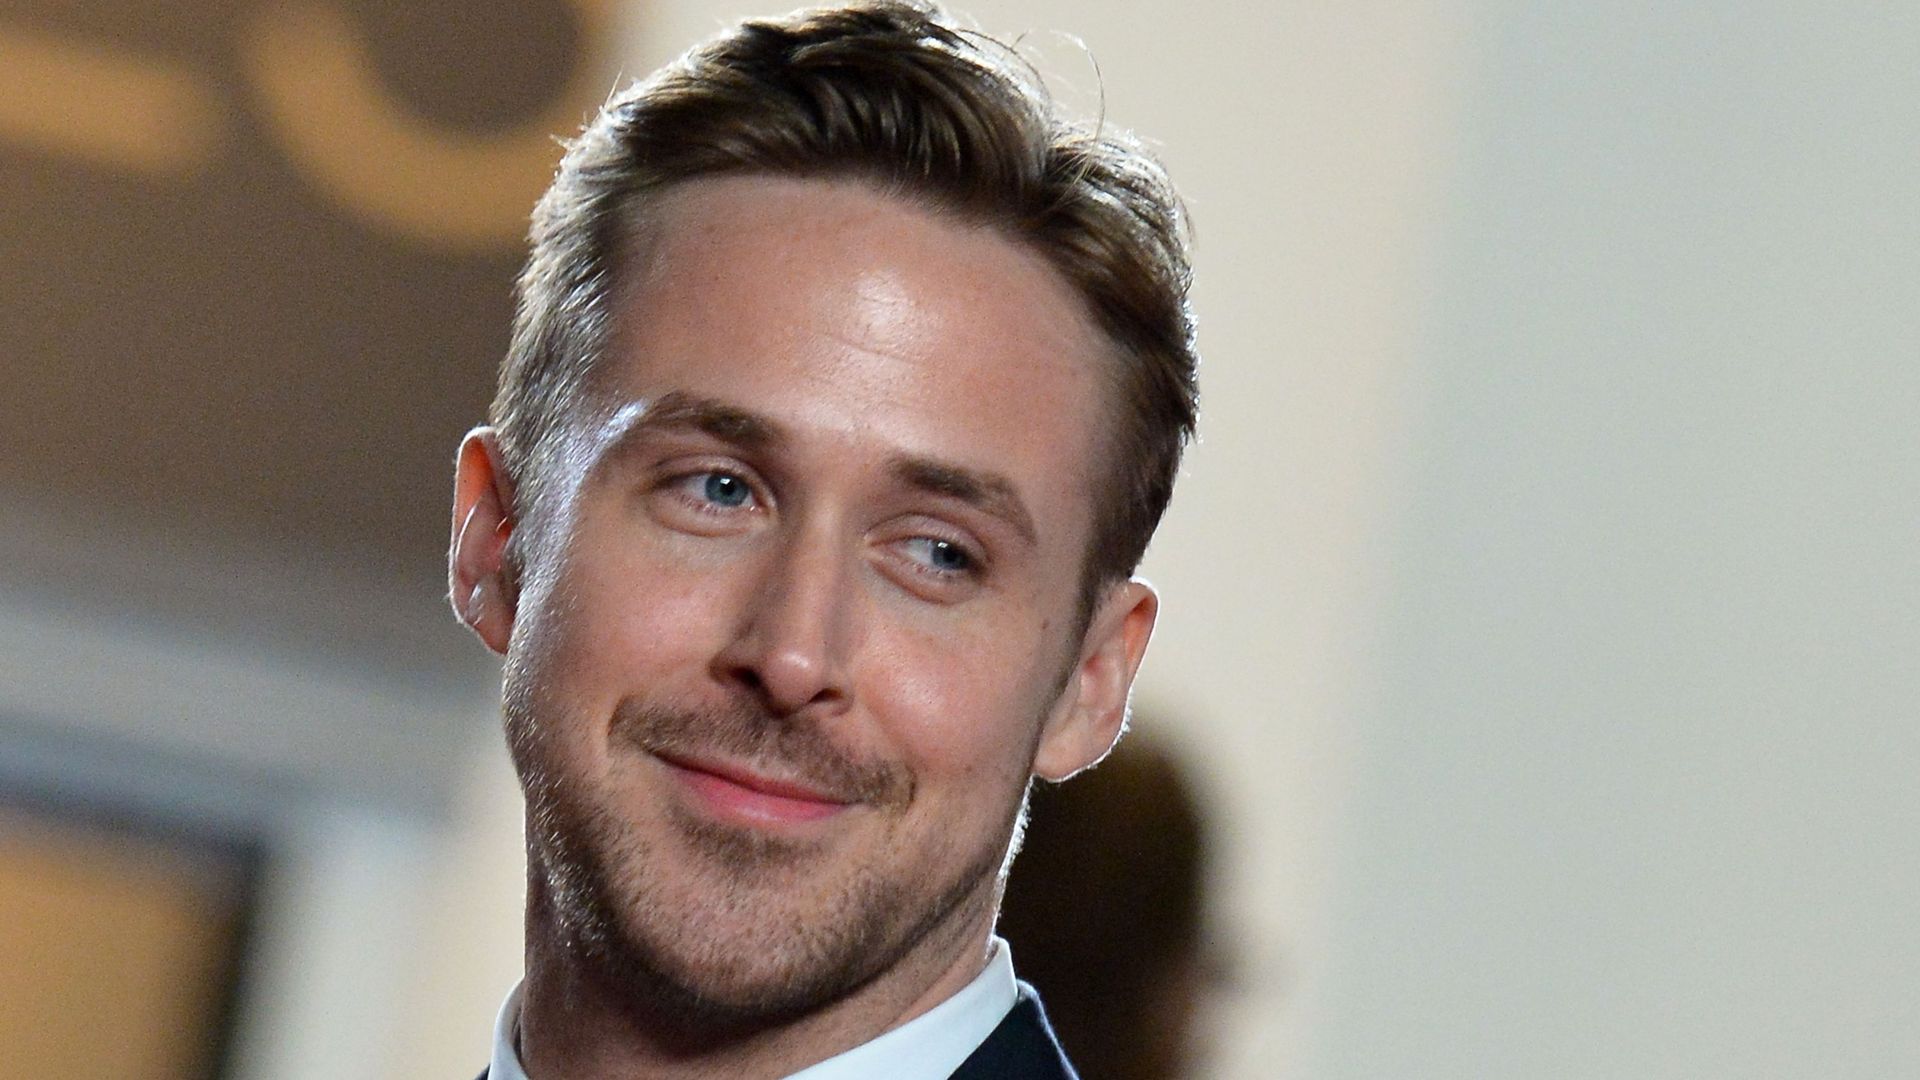 Ryan Gosling pressenti pour jouer dans "Haunted Mansion" de Guillermo del Toro